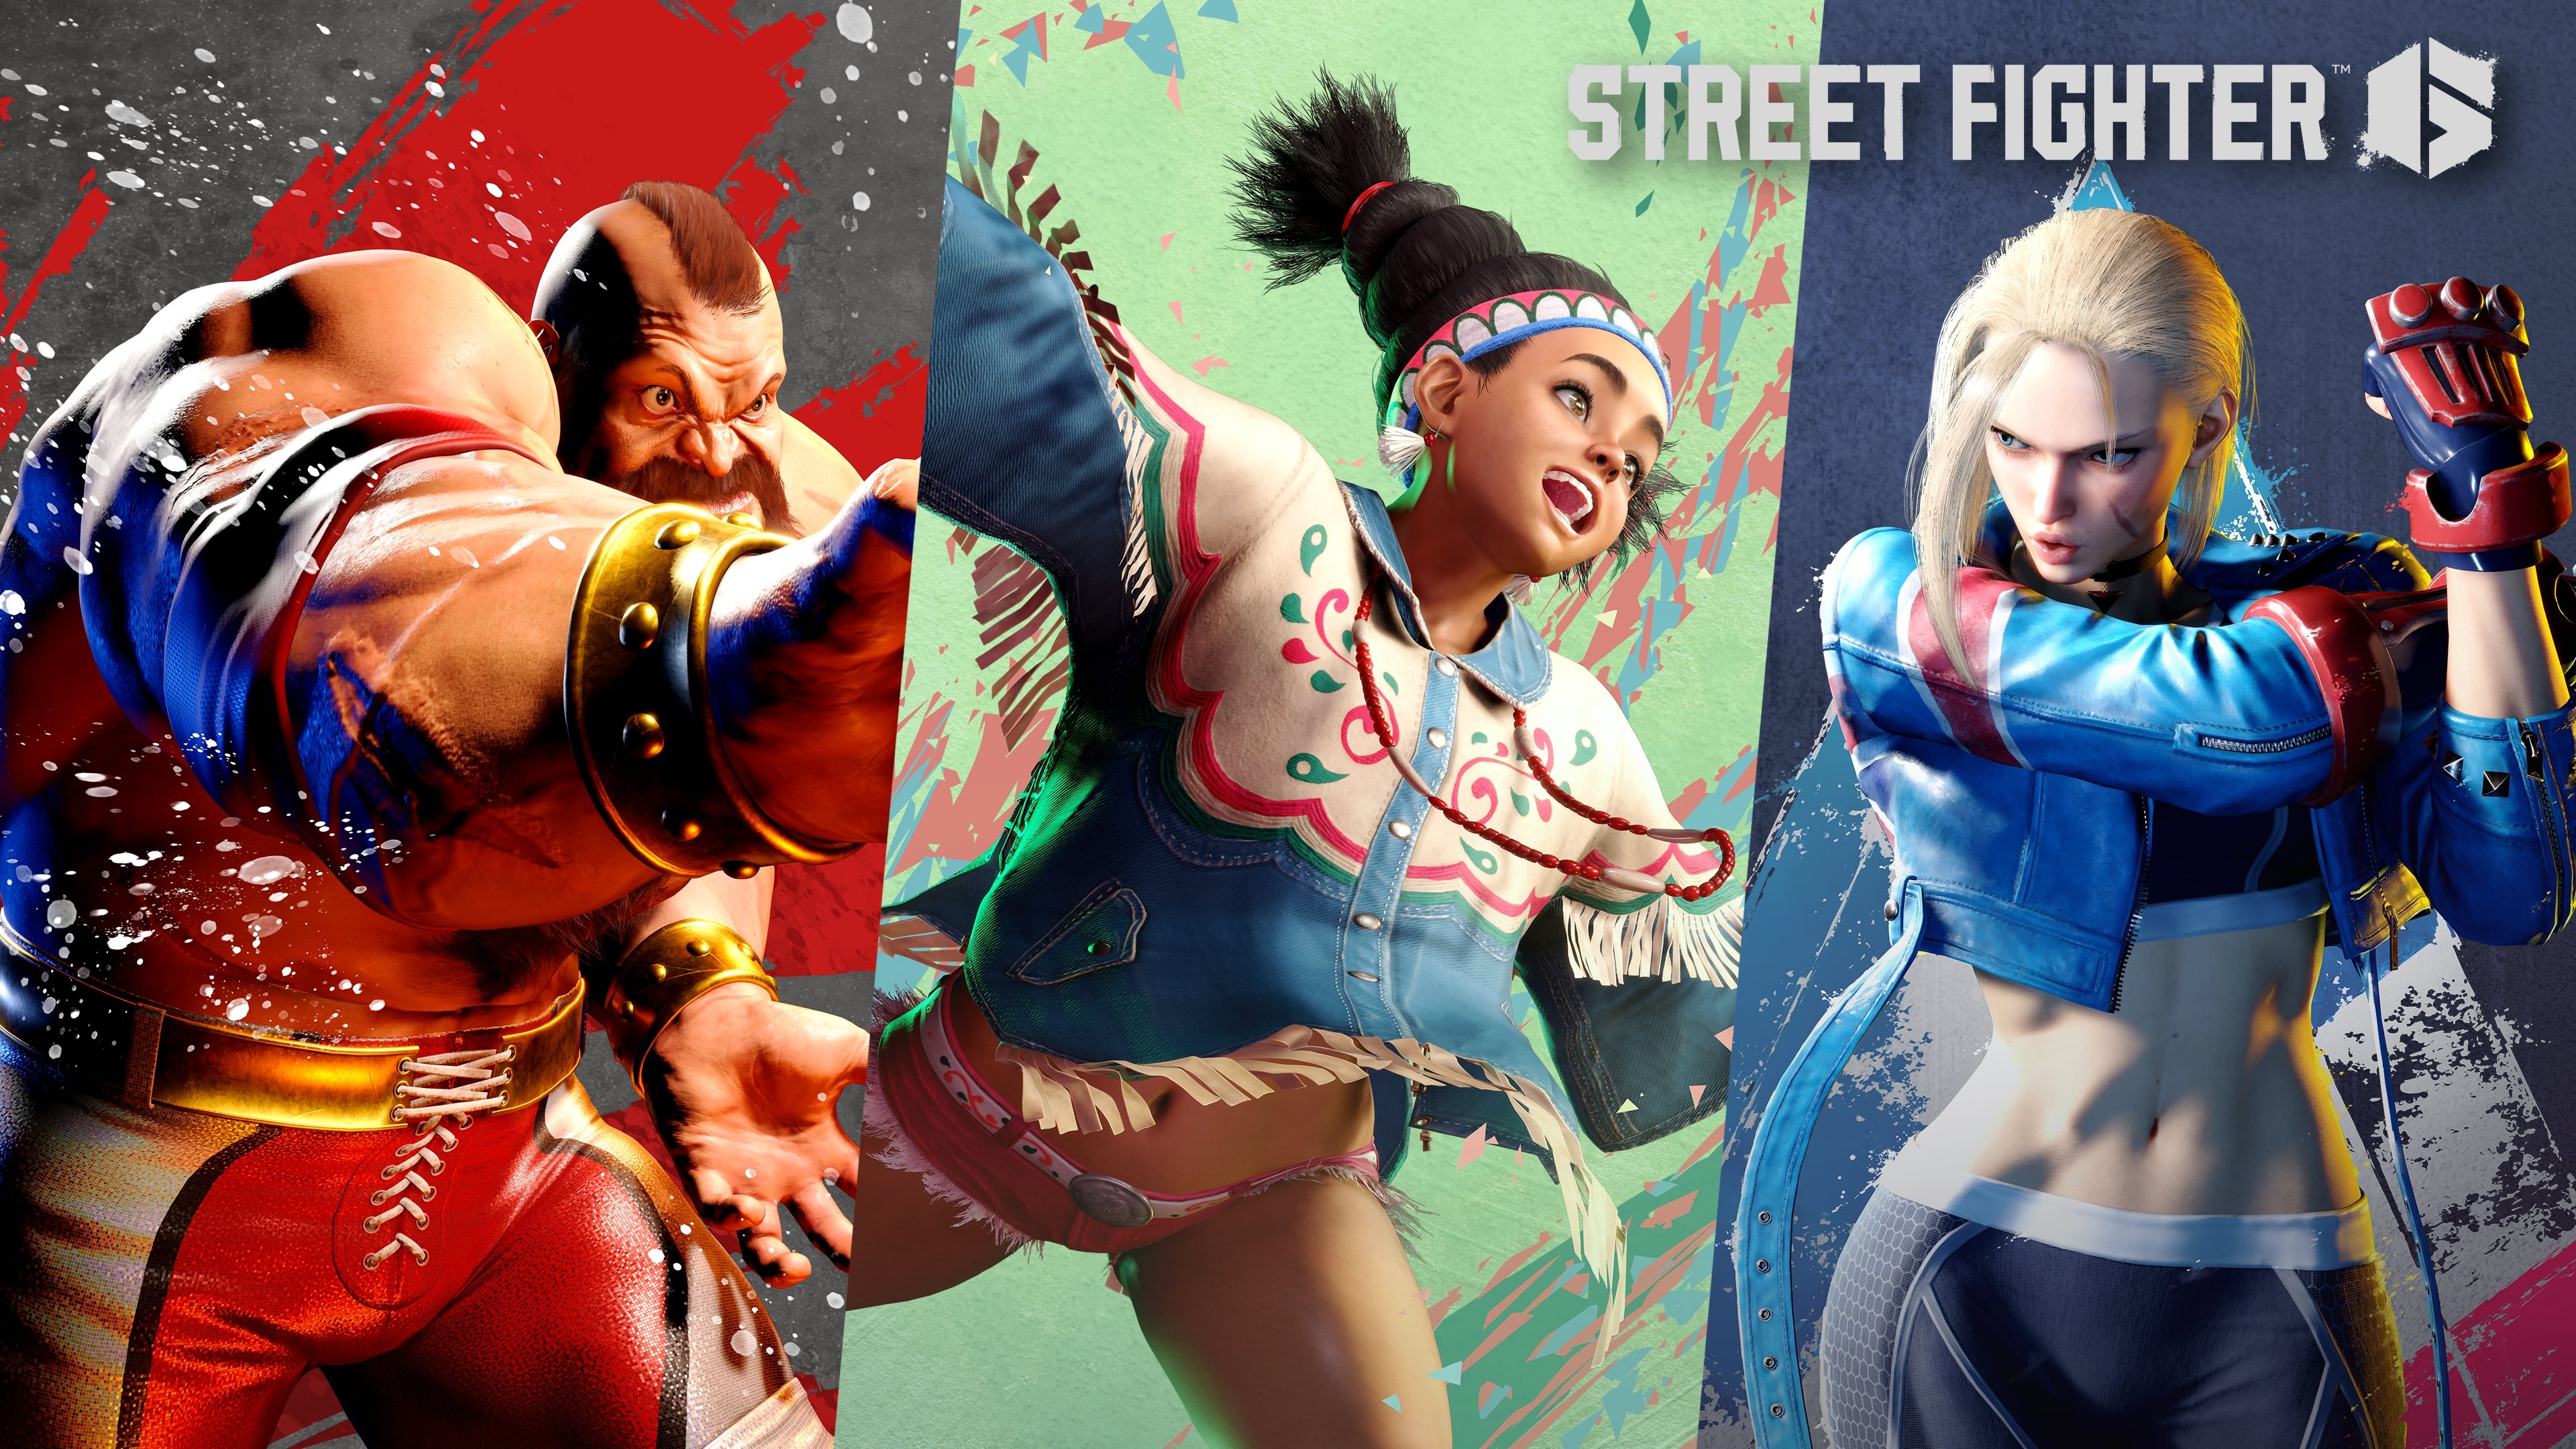 Street Fighter 6 Juri vs Lily PC Mod 